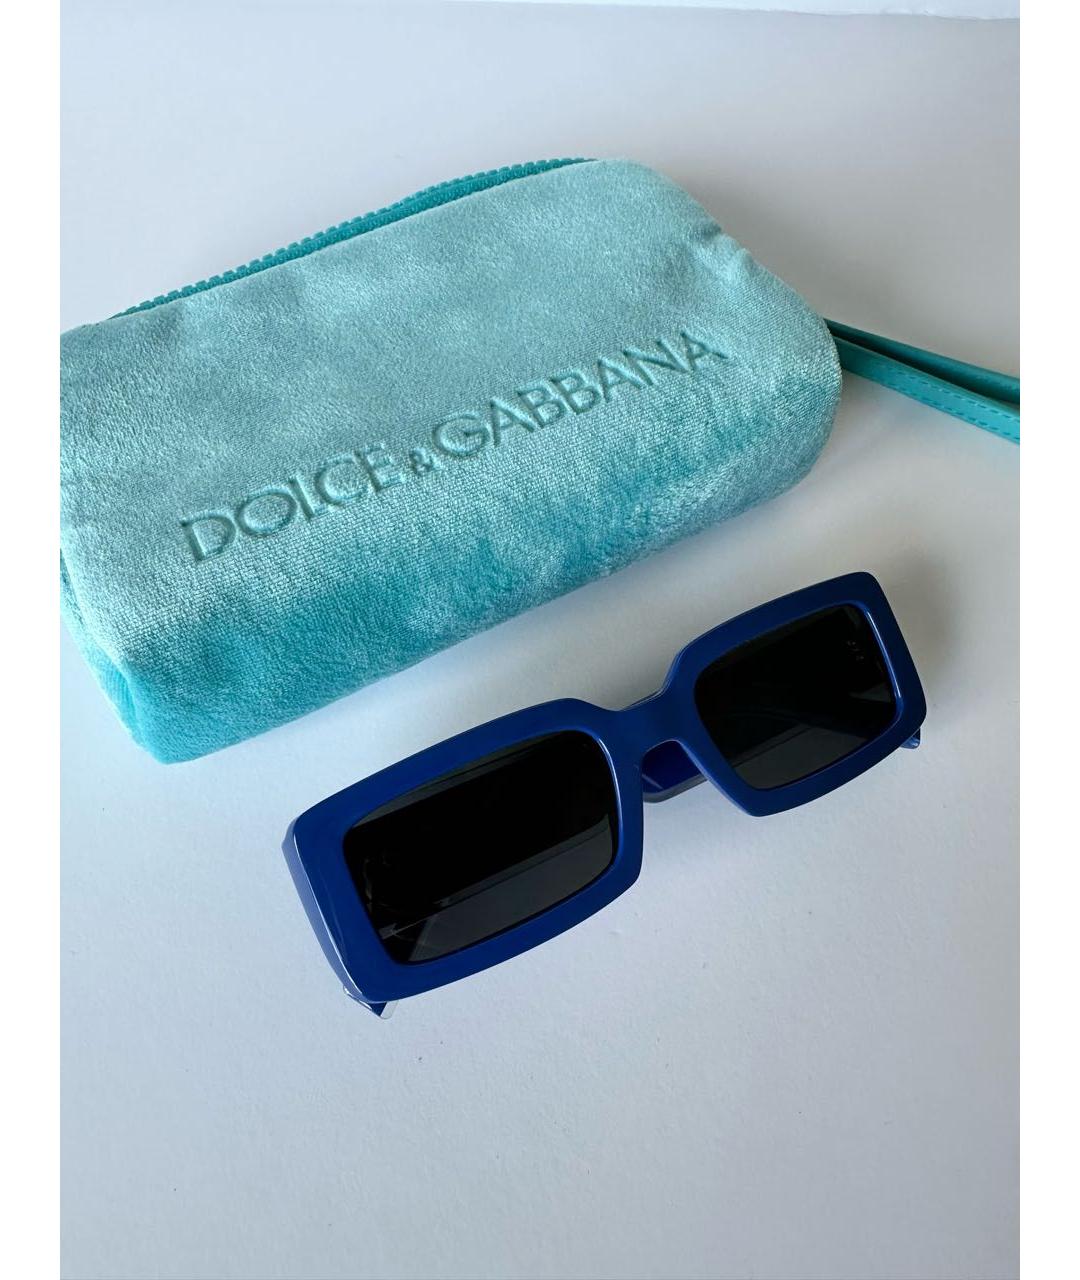 DOLCE&GABBANA Синие пластиковые солнцезащитные очки, фото 4